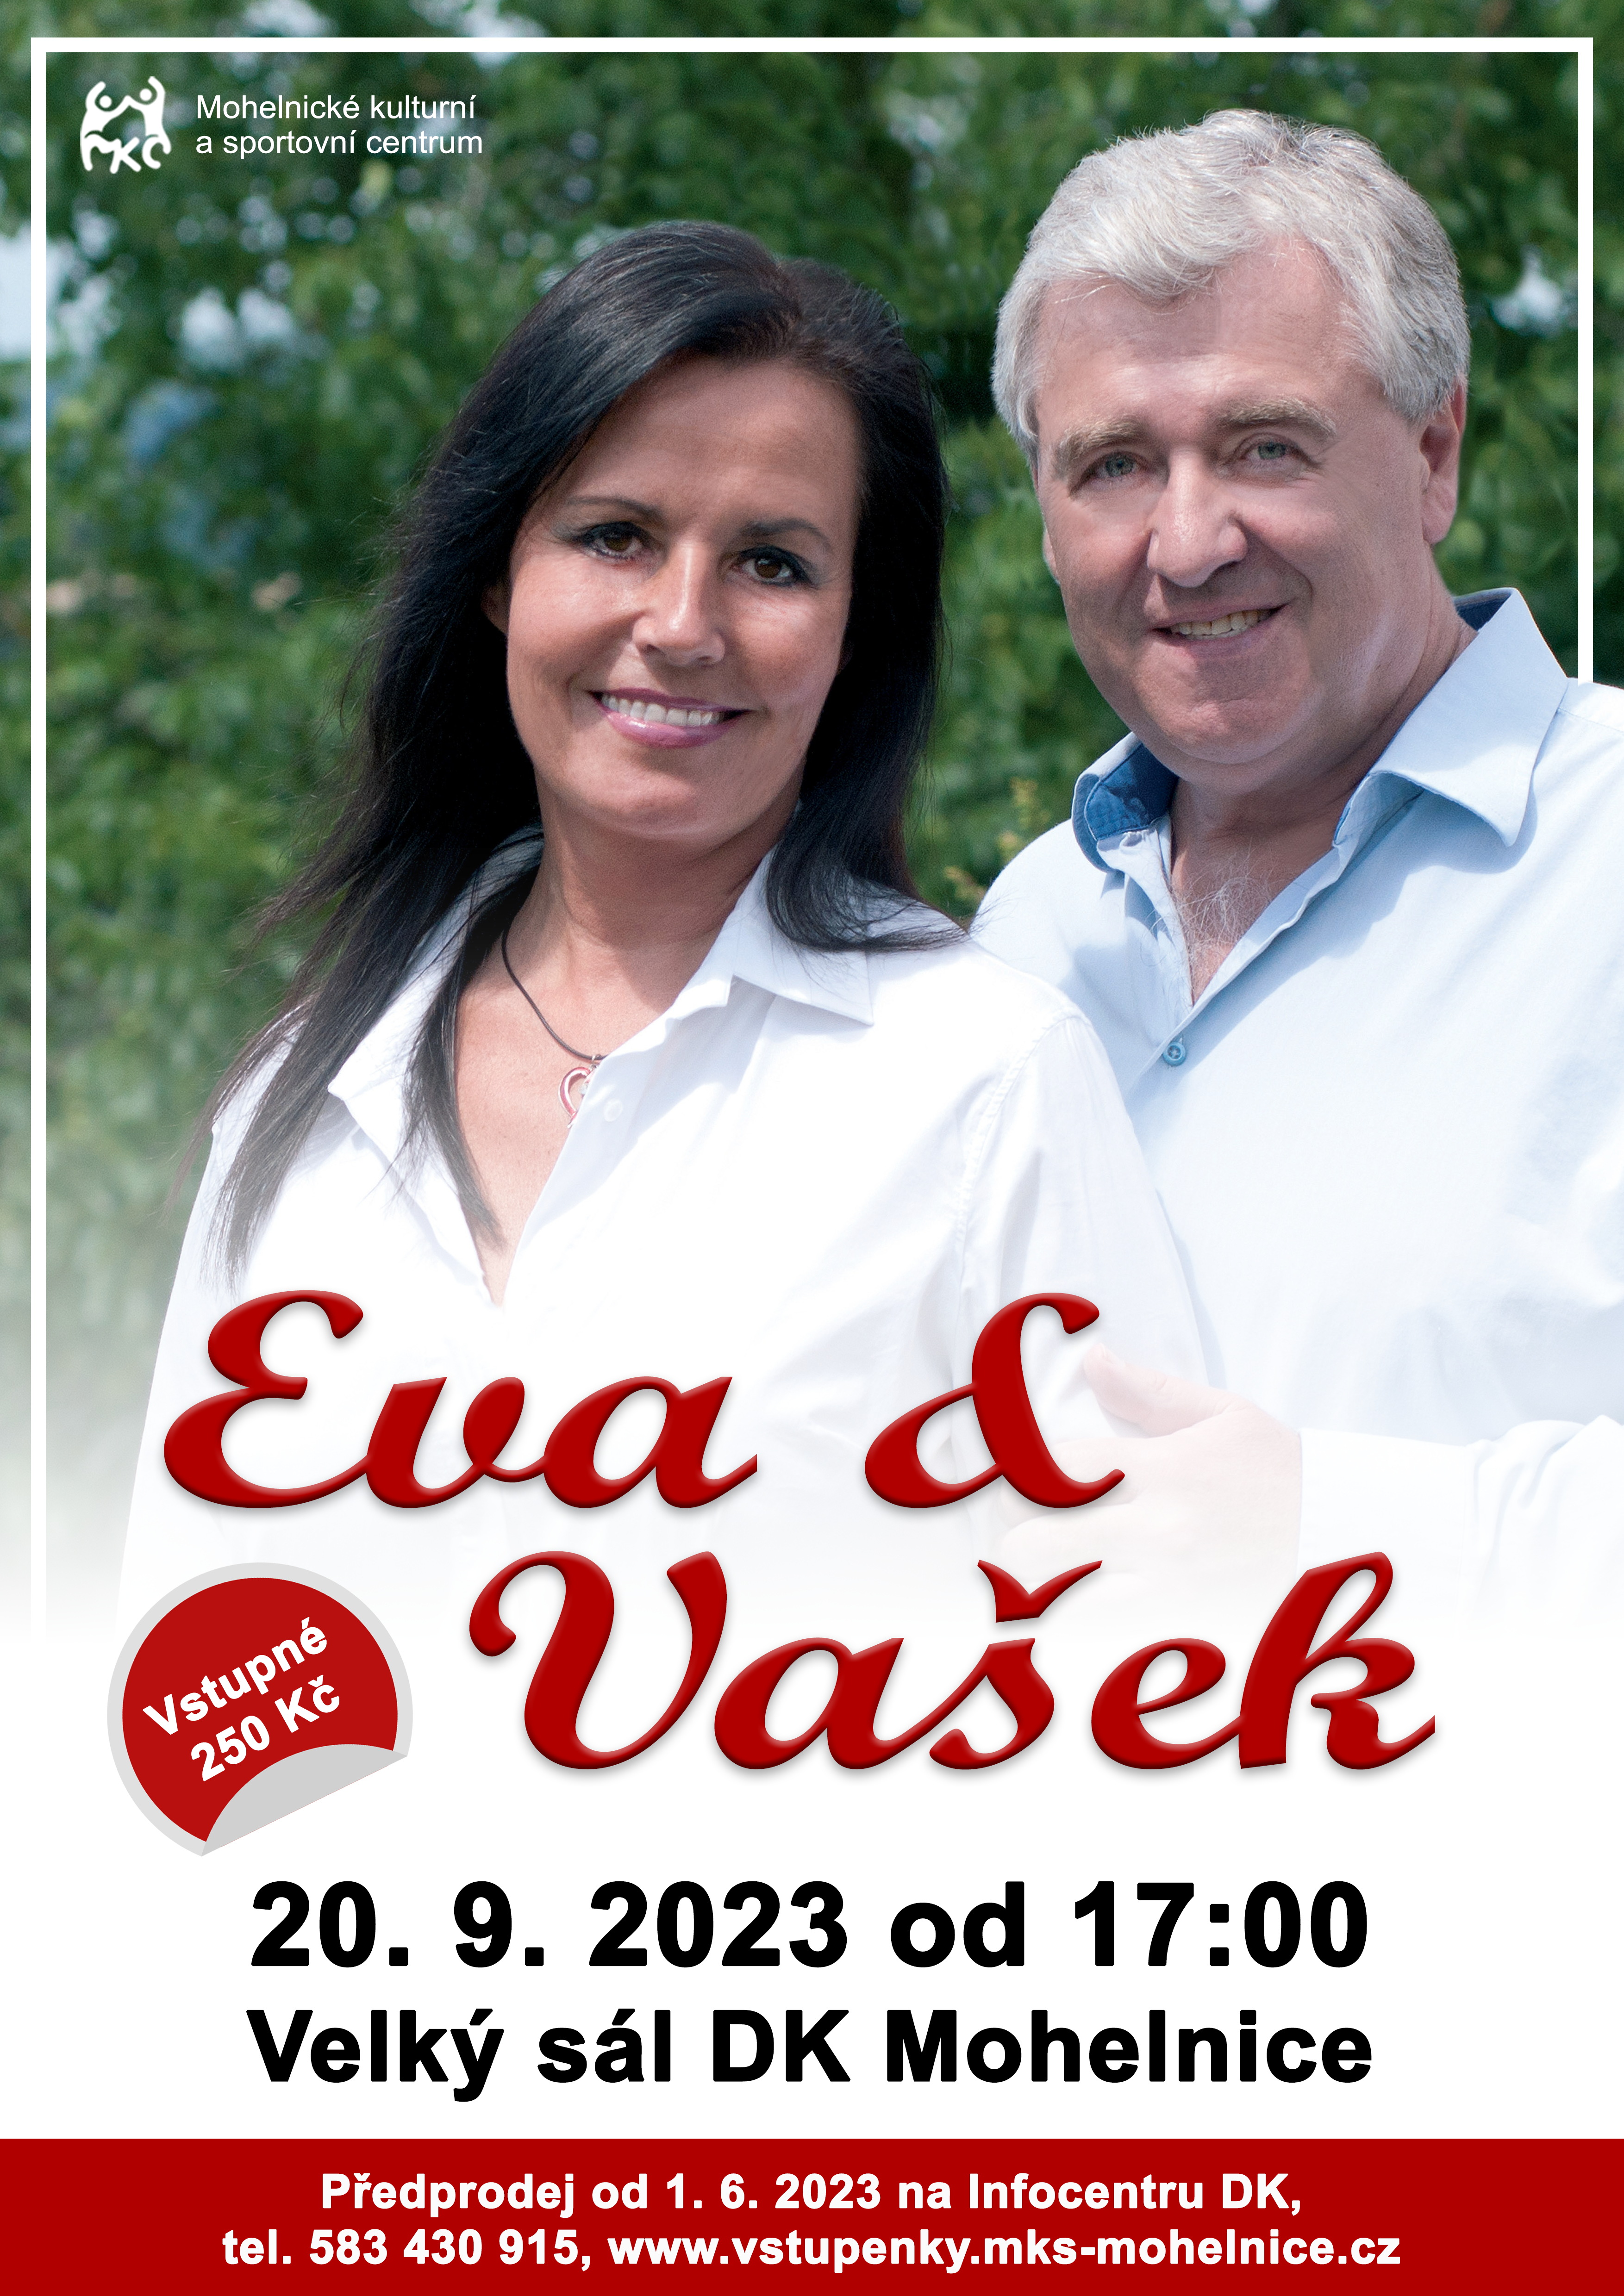 www.mks-mohelnice.cz/akce/9283-eva-a-vasek-qj0f